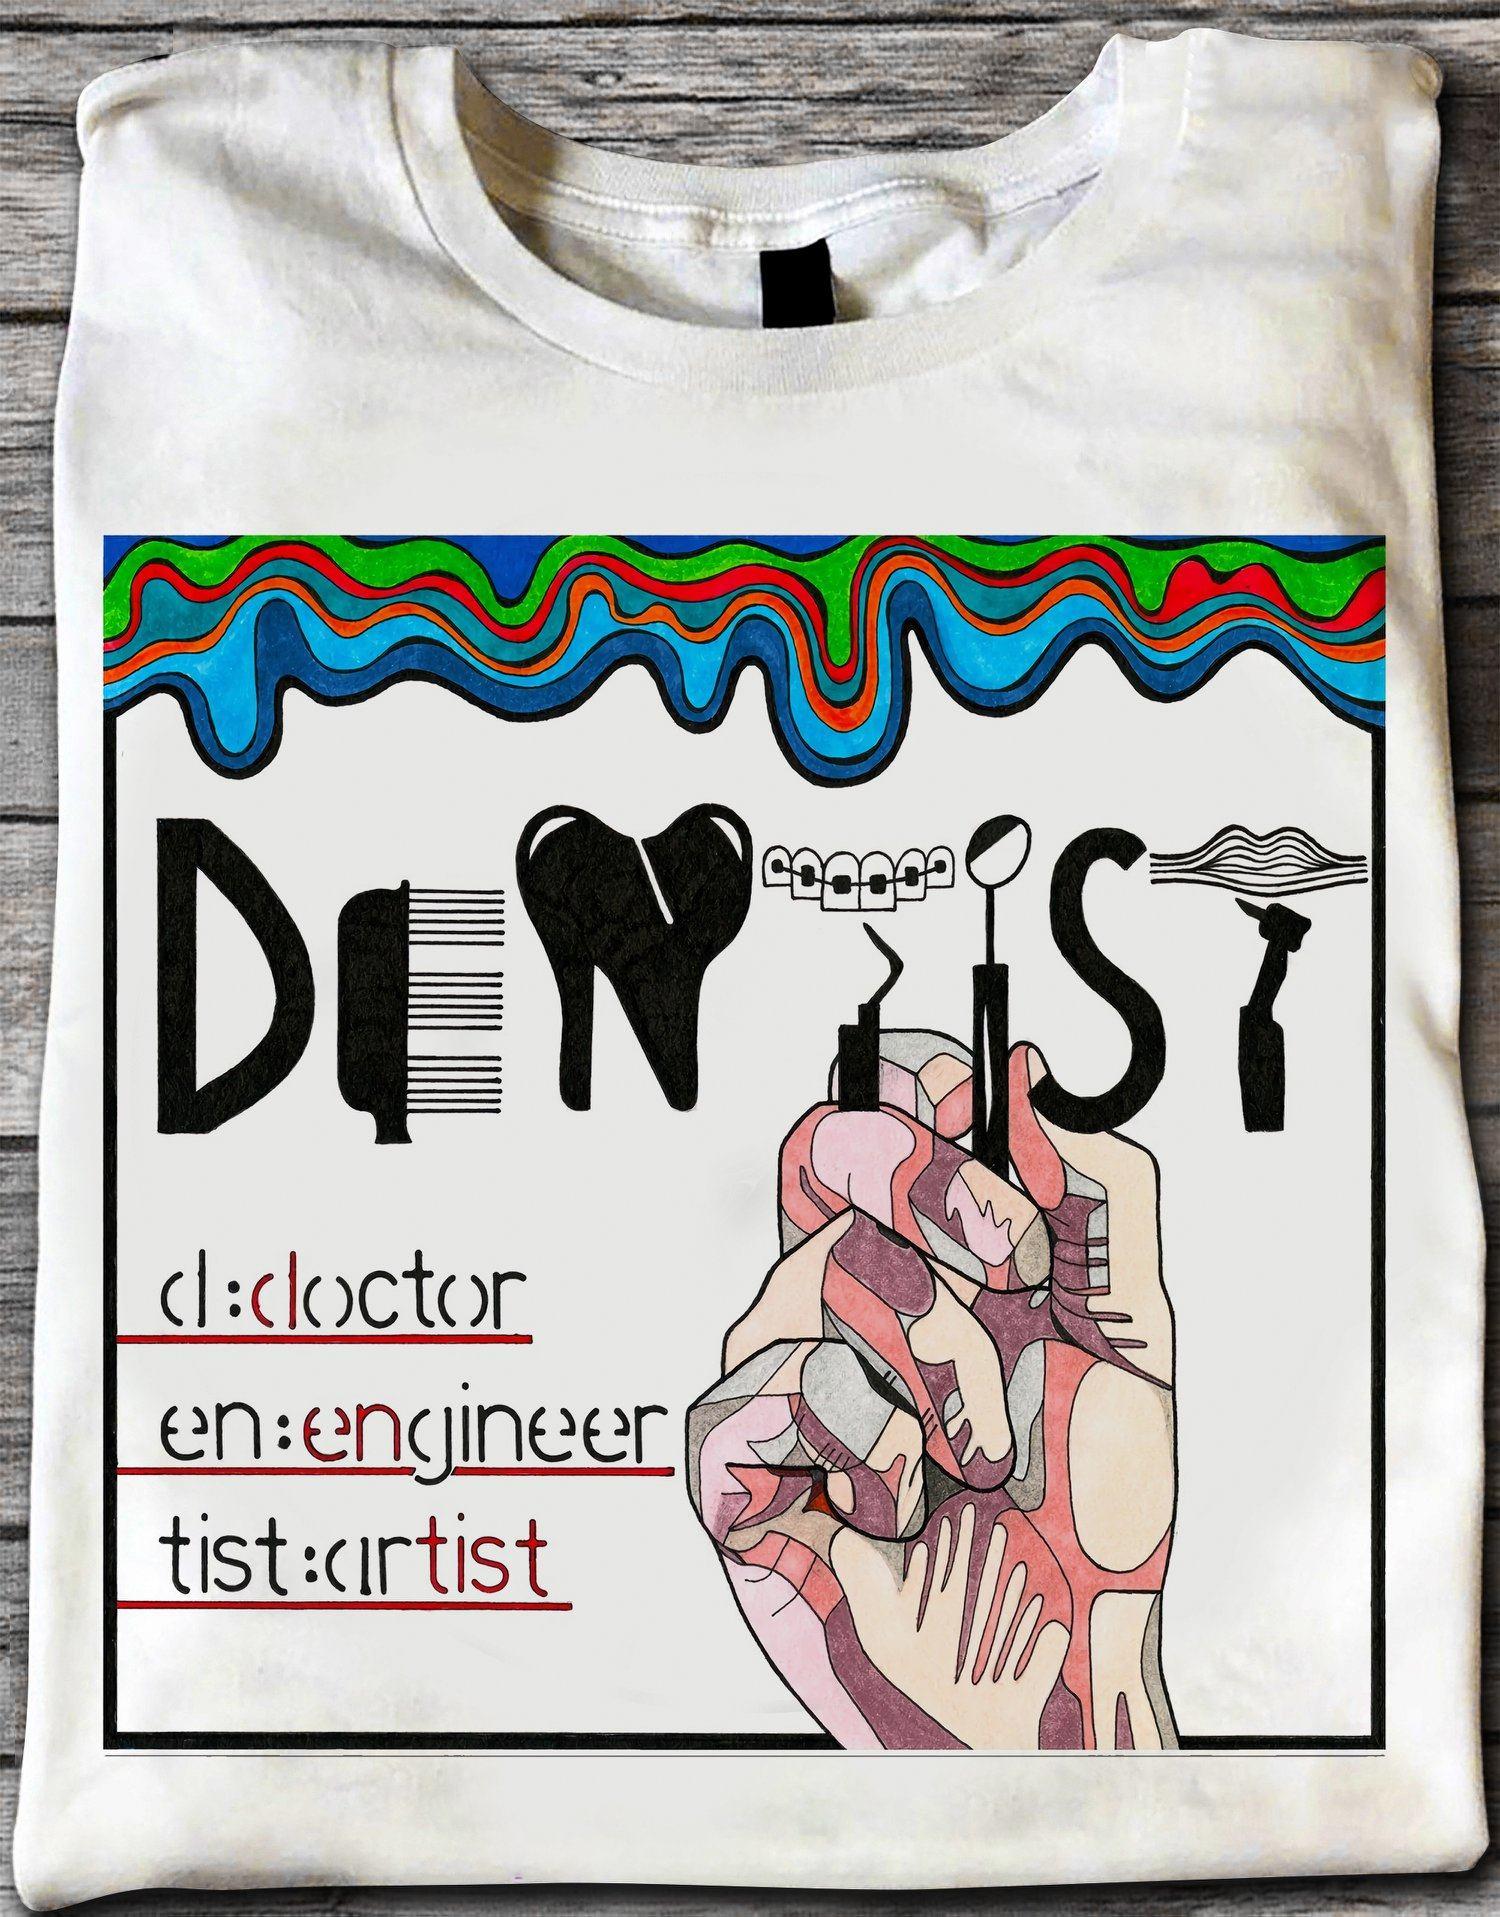 Dentist doctor - Gift for dentist, engineer and artist